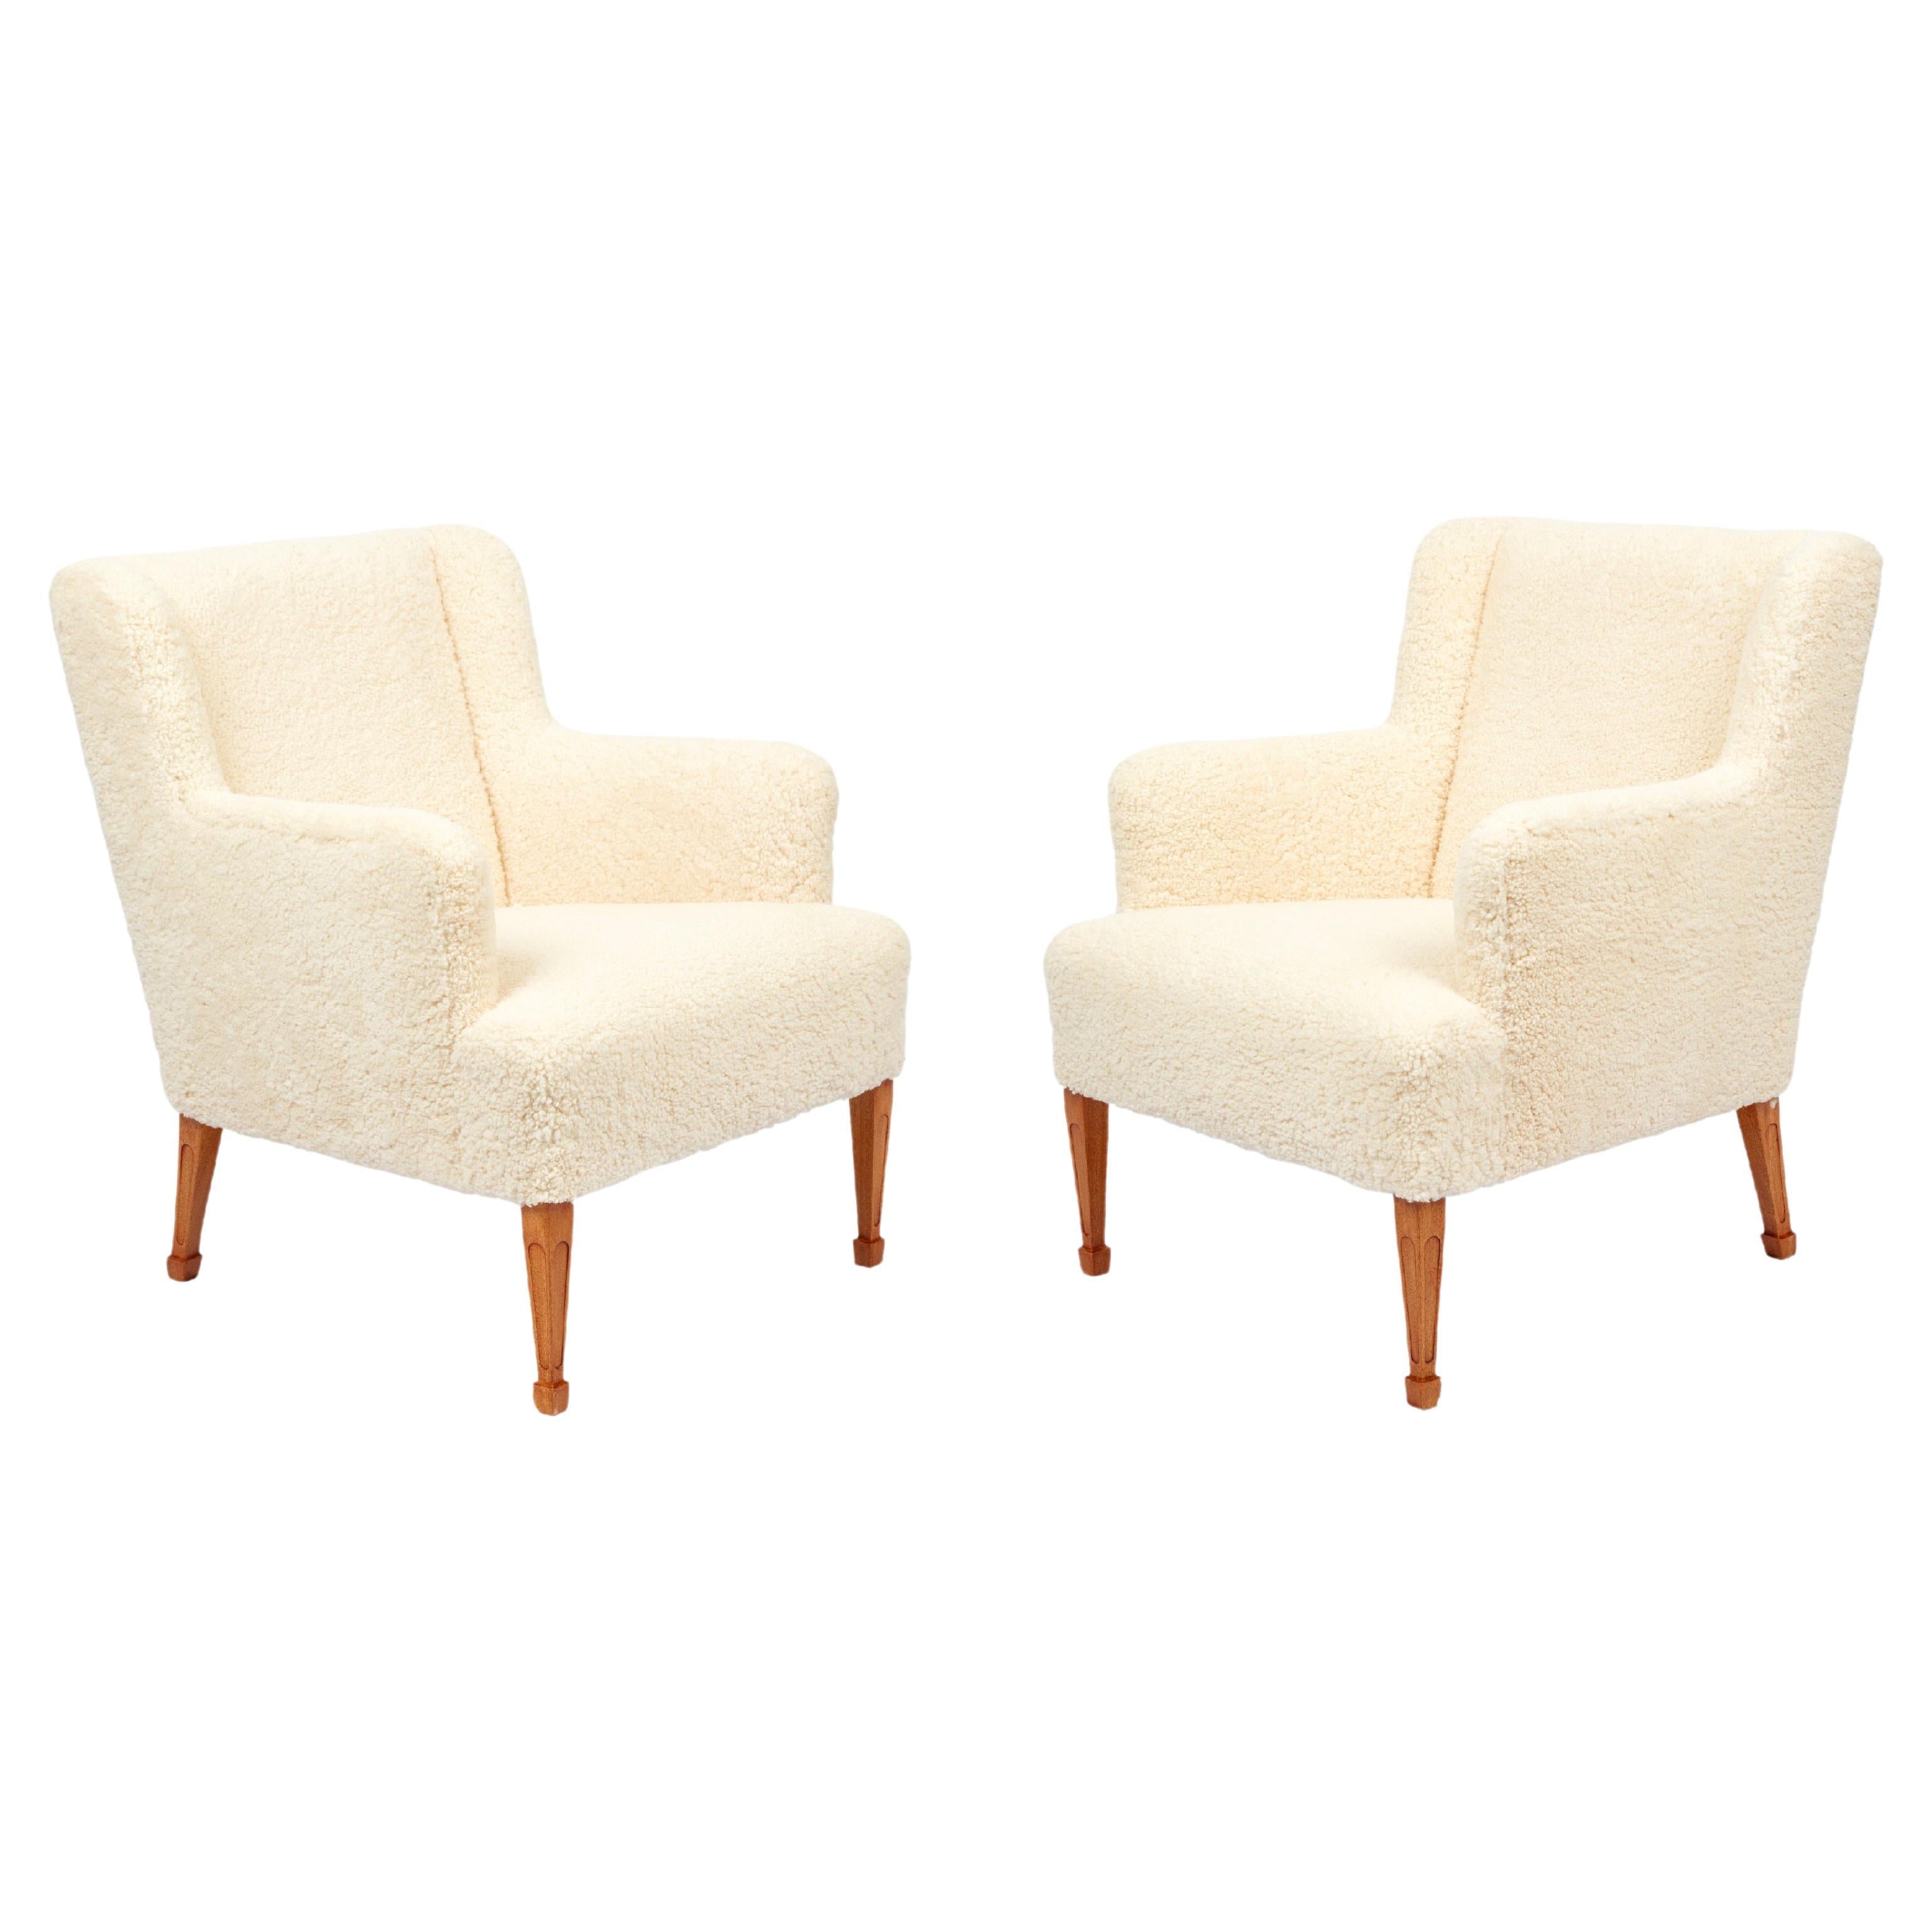 Pair of Frits Henningsen Sheepskin Lounge Chairs